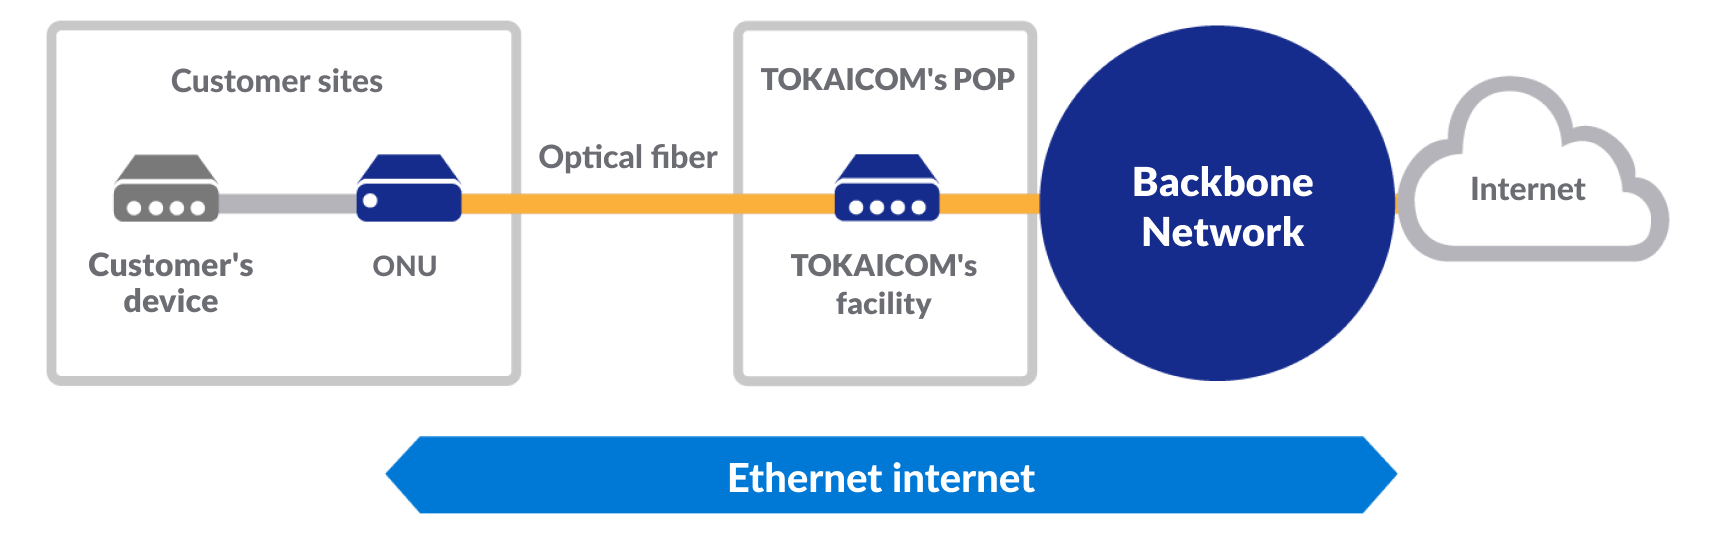 Ethernet internet